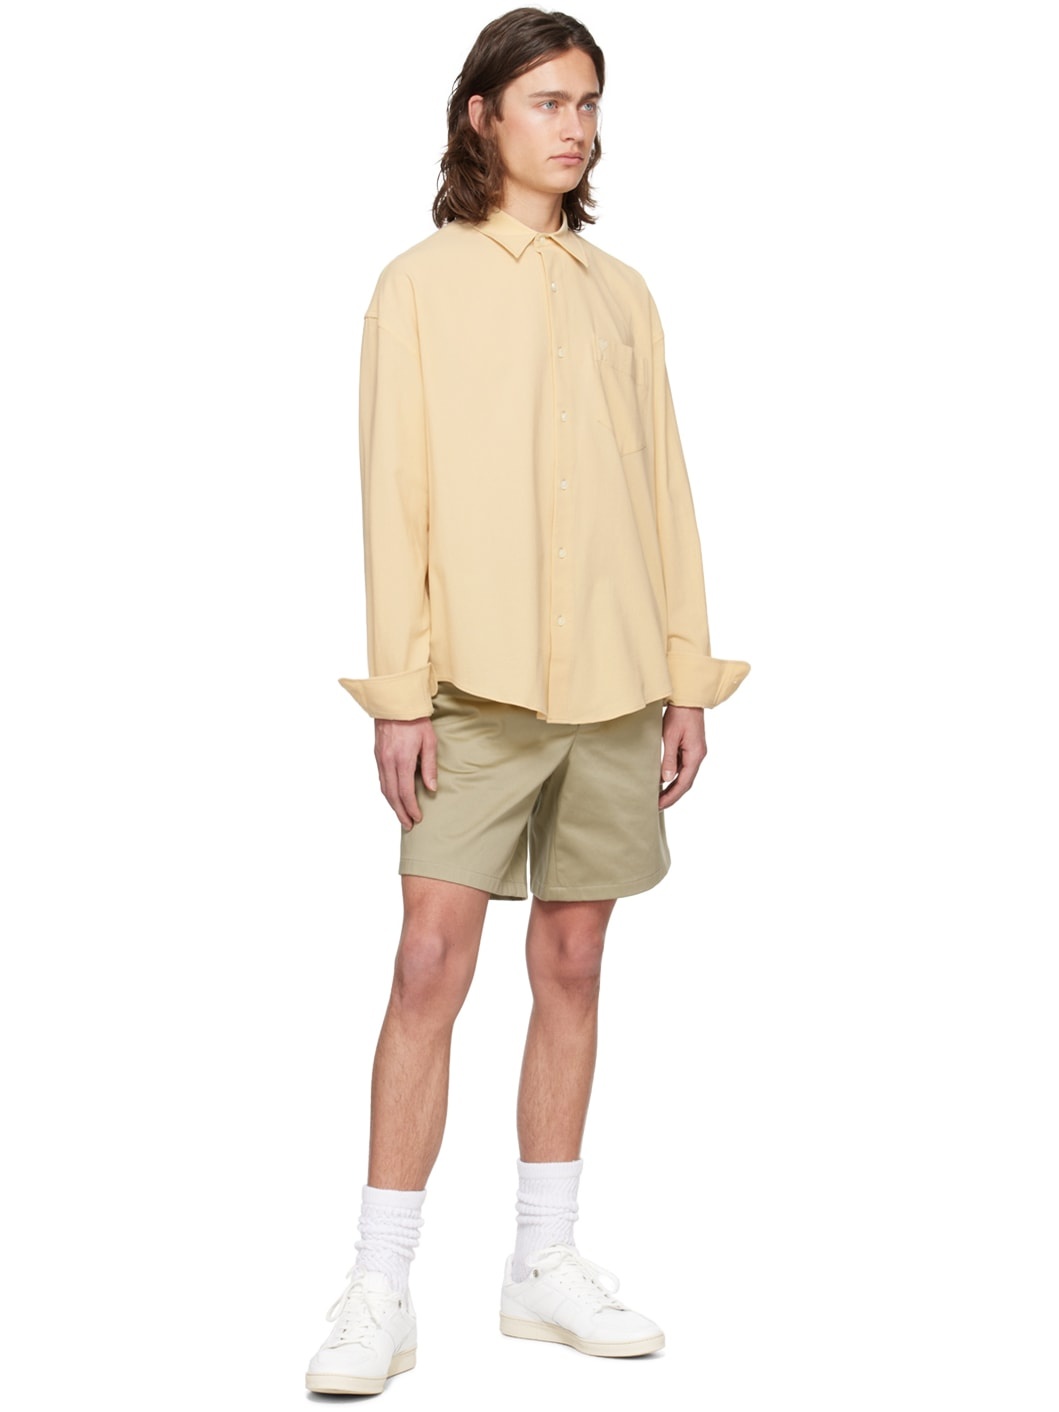 Khaki Elasticated Waist Shorts - 4